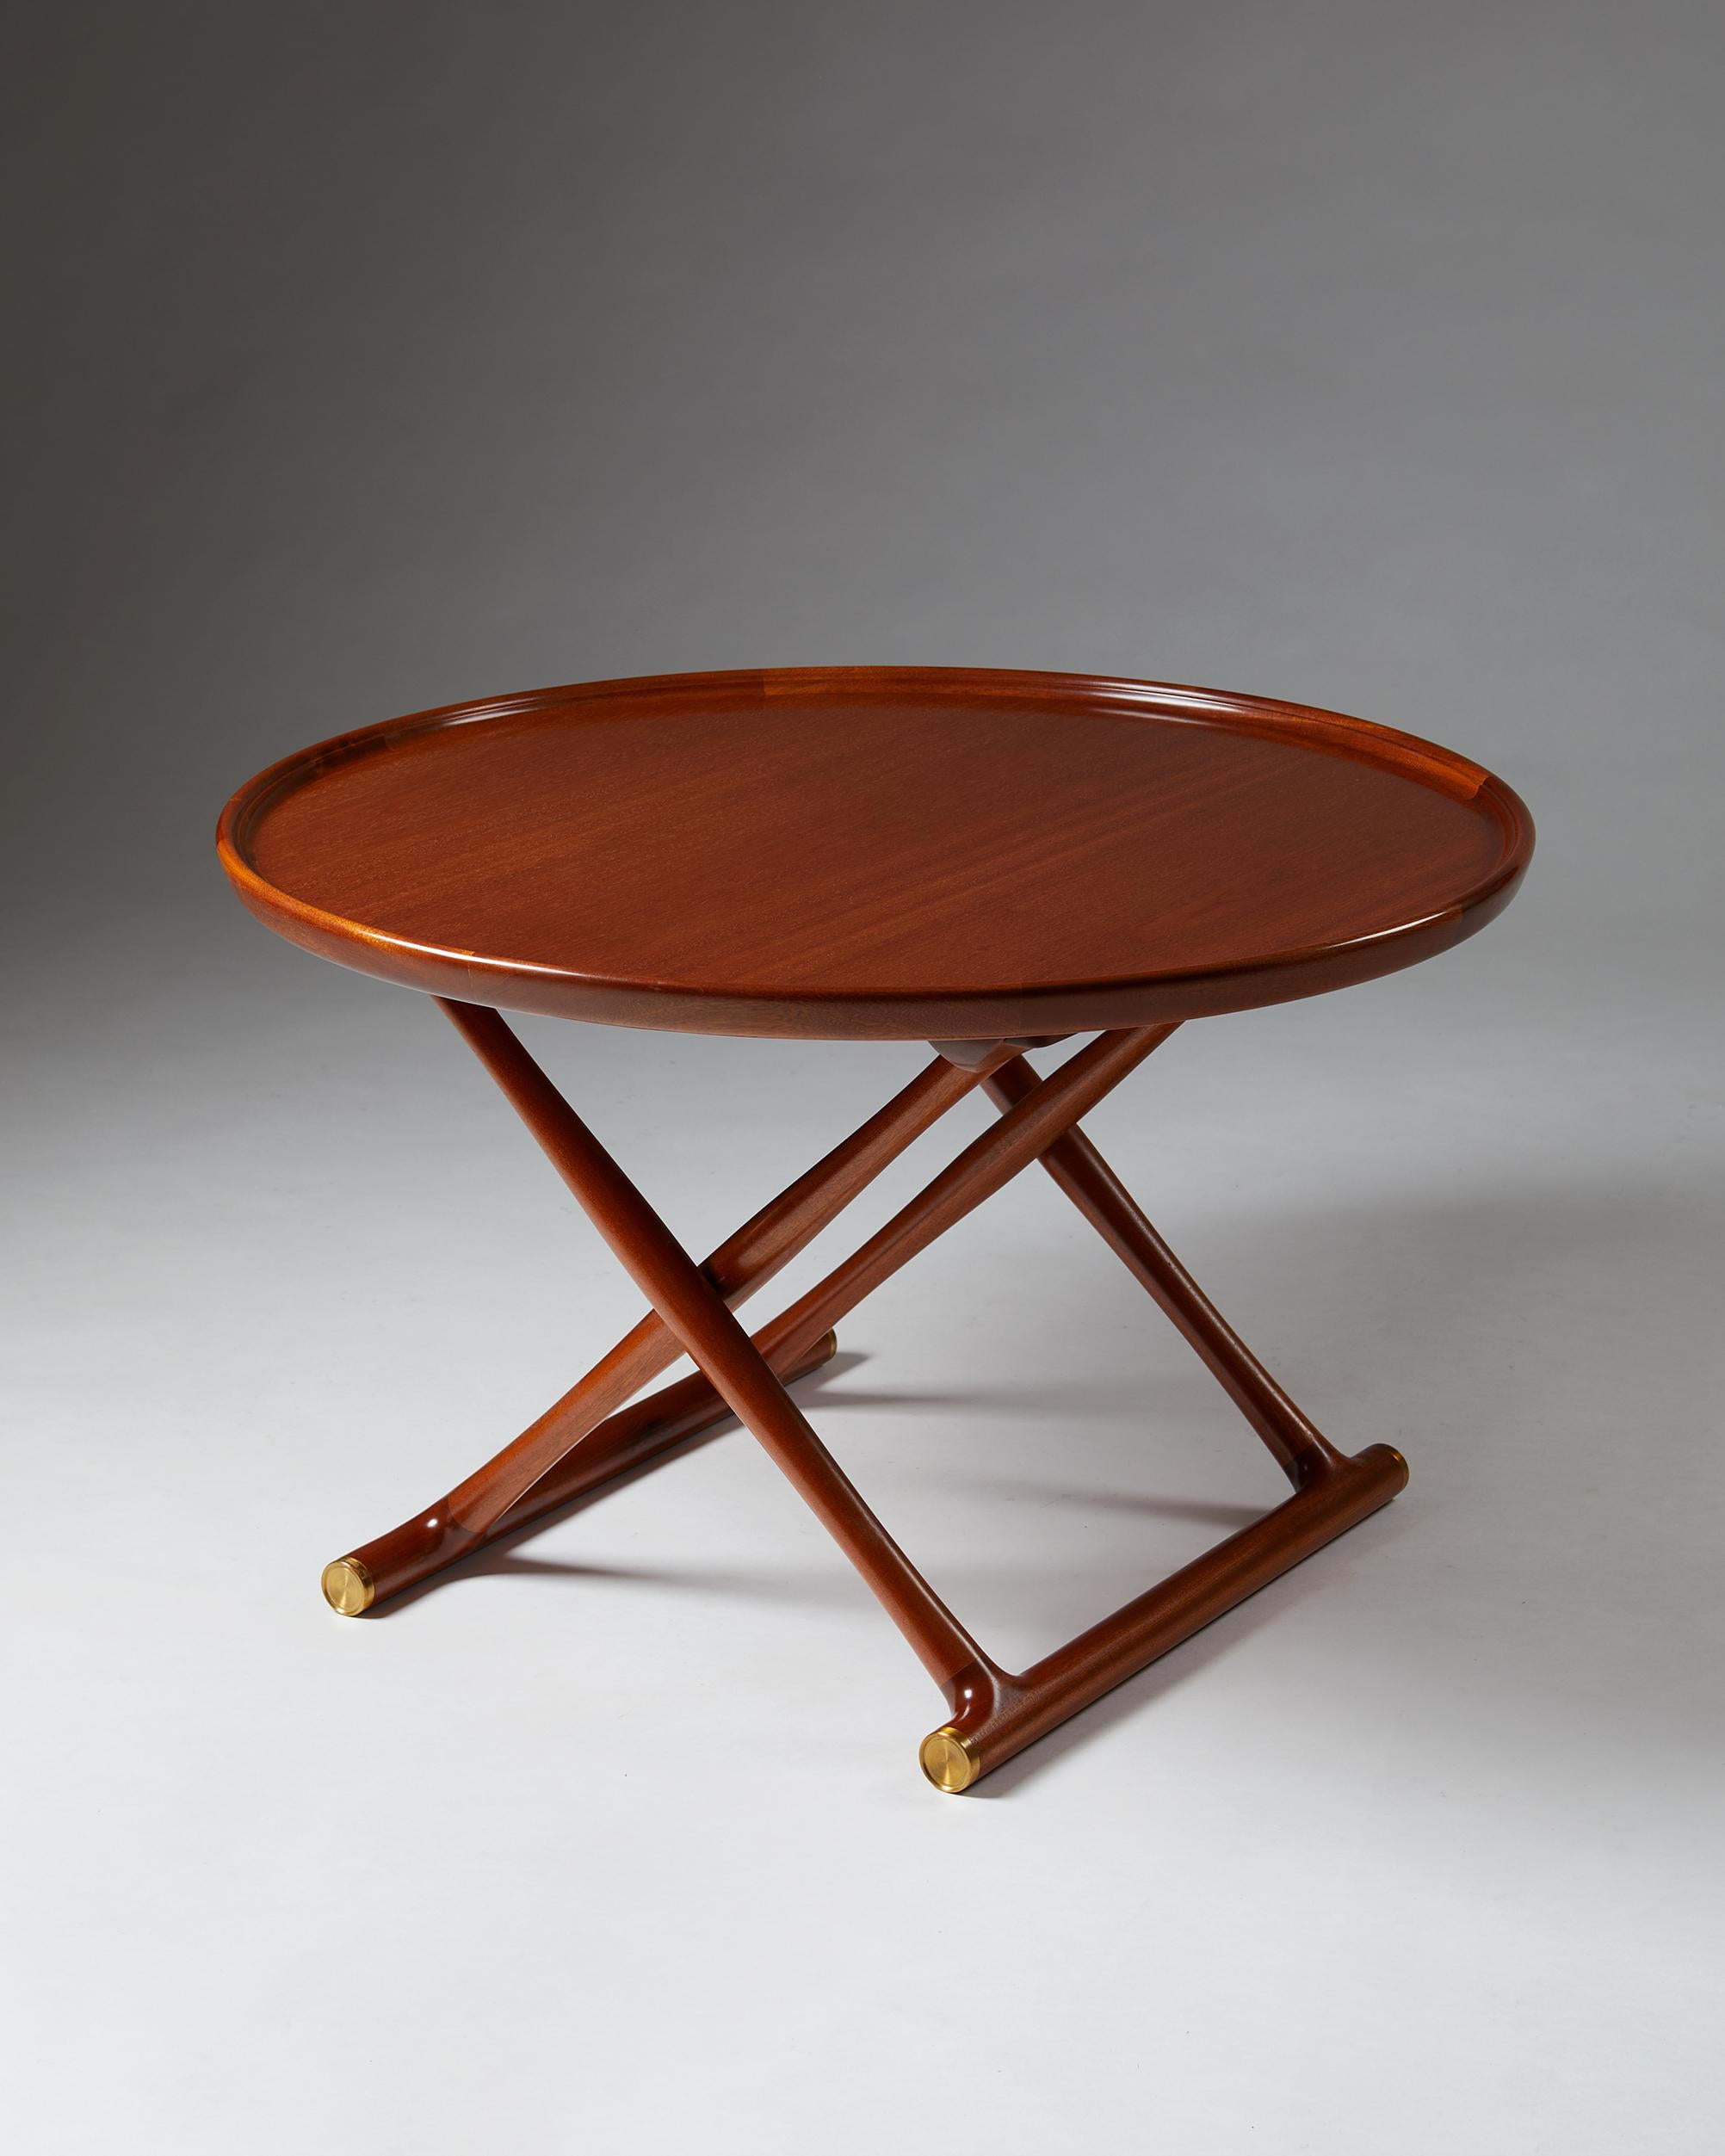 Scandinavian Modern Occasional Table “The Egyptian table”, Designed by Mogens Lassen